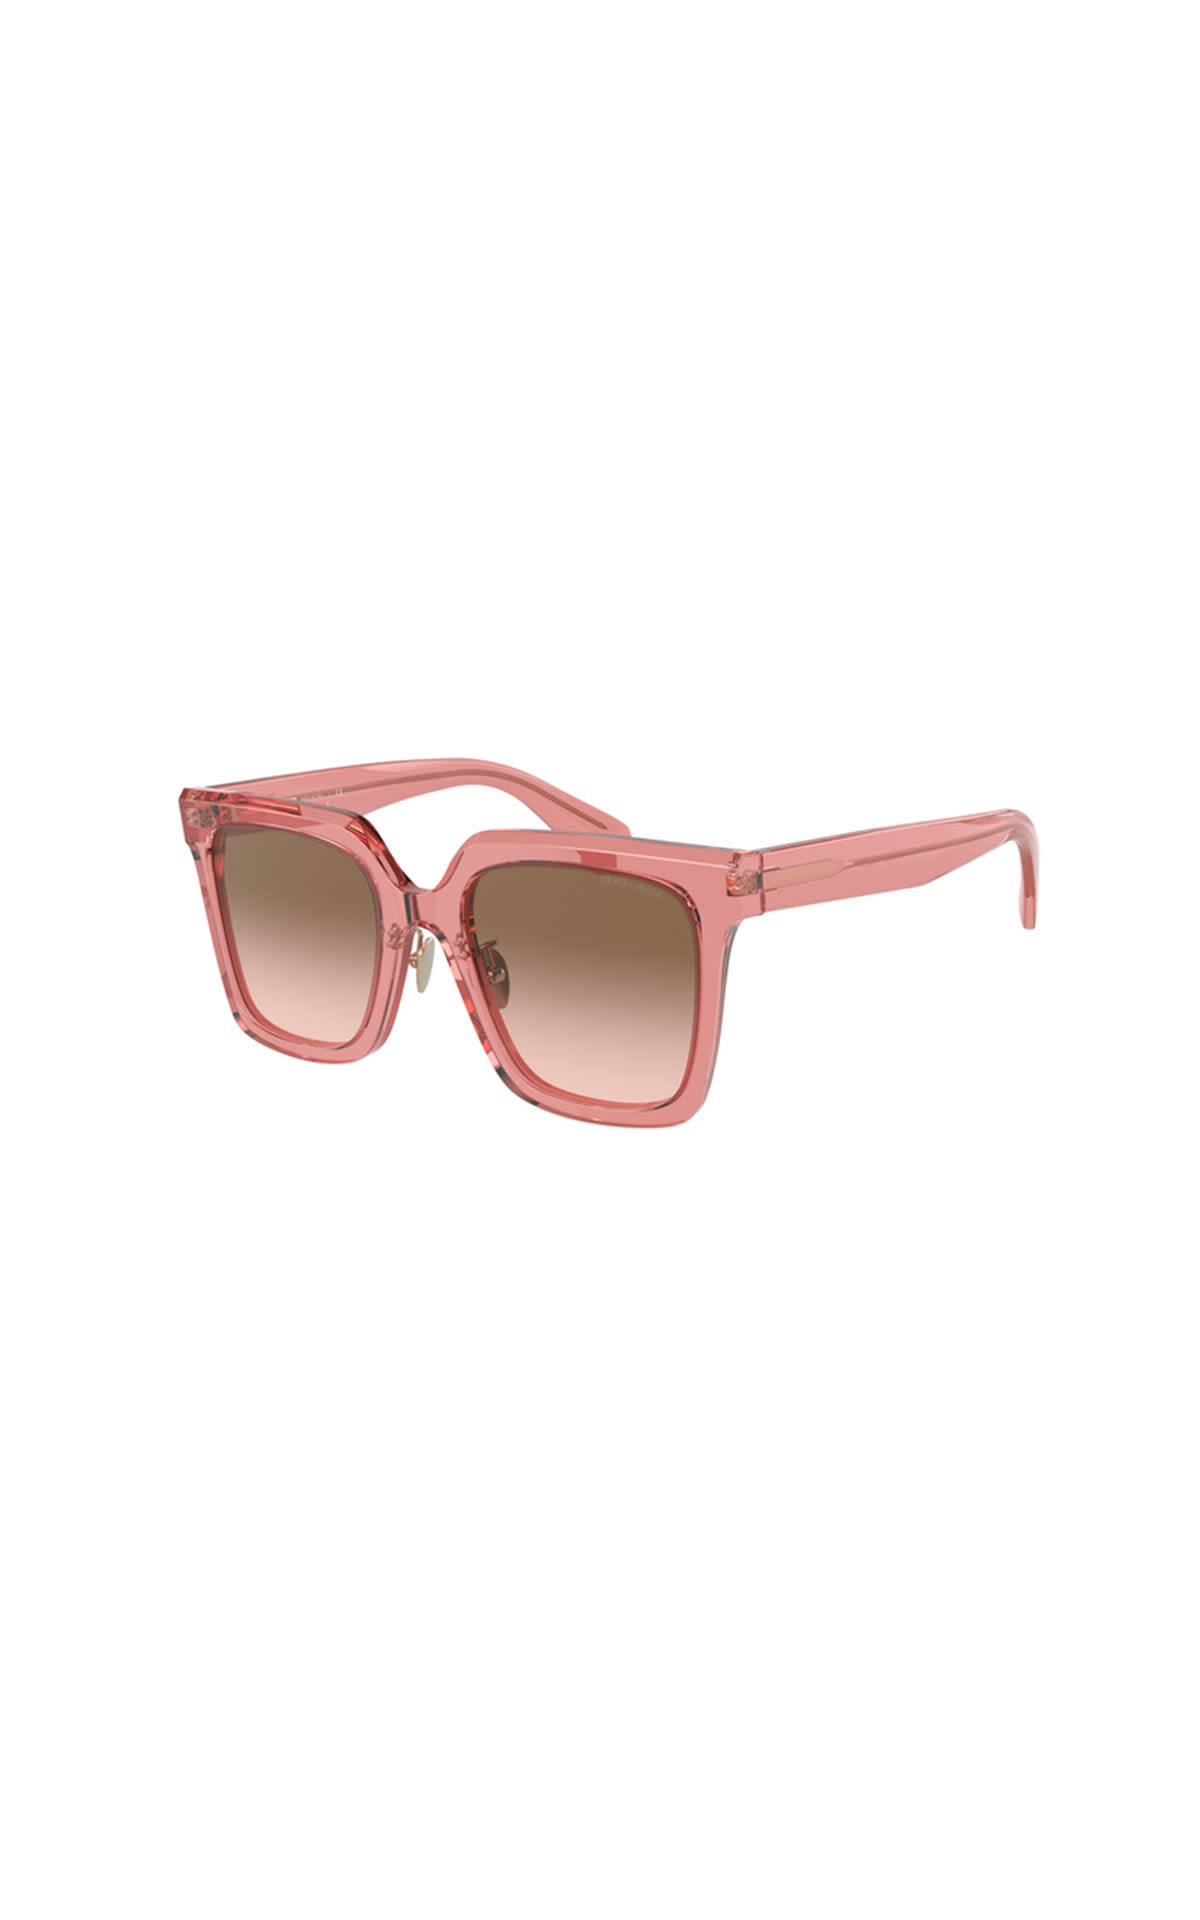 Pink sunglasses SunglassHut